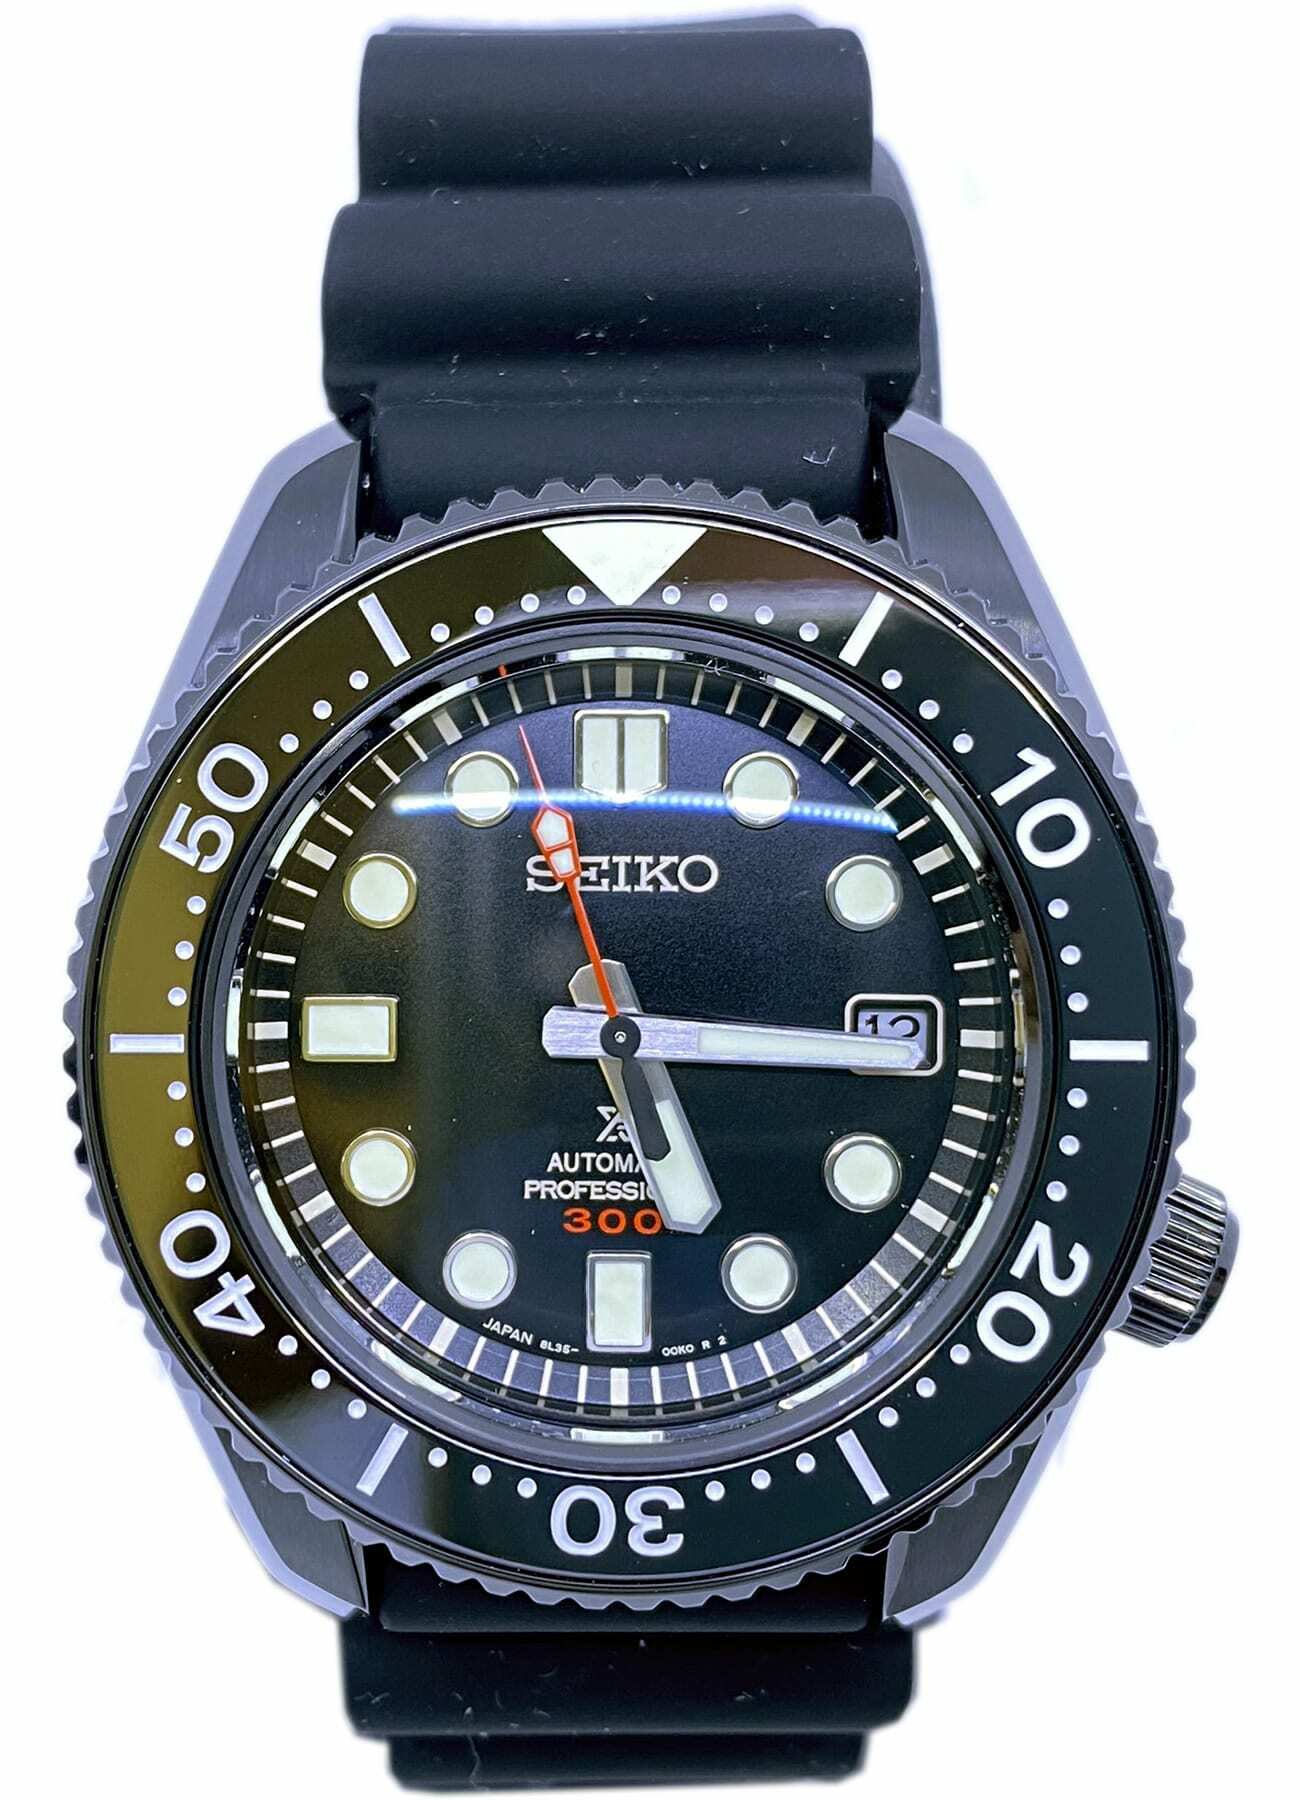 Very Rare Seiko Prospex SLA035 Limited Edition - Exquisite Timepieces